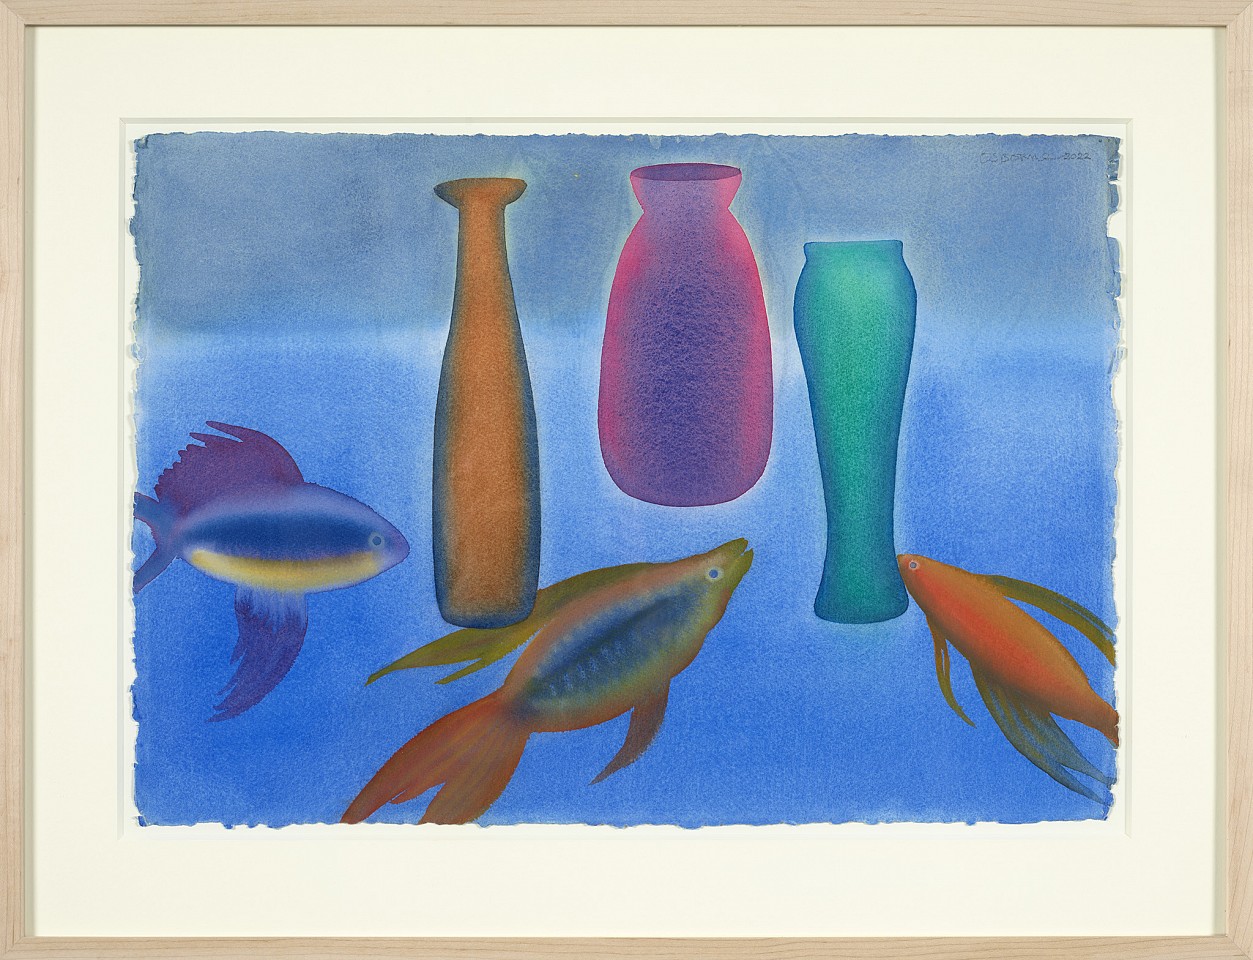 Elizabeth Osborne, Fish Bowl, 2022
Watercolor on paper, 15 x 22 in. (38.1 x 55.9 cm)
OSB-00634